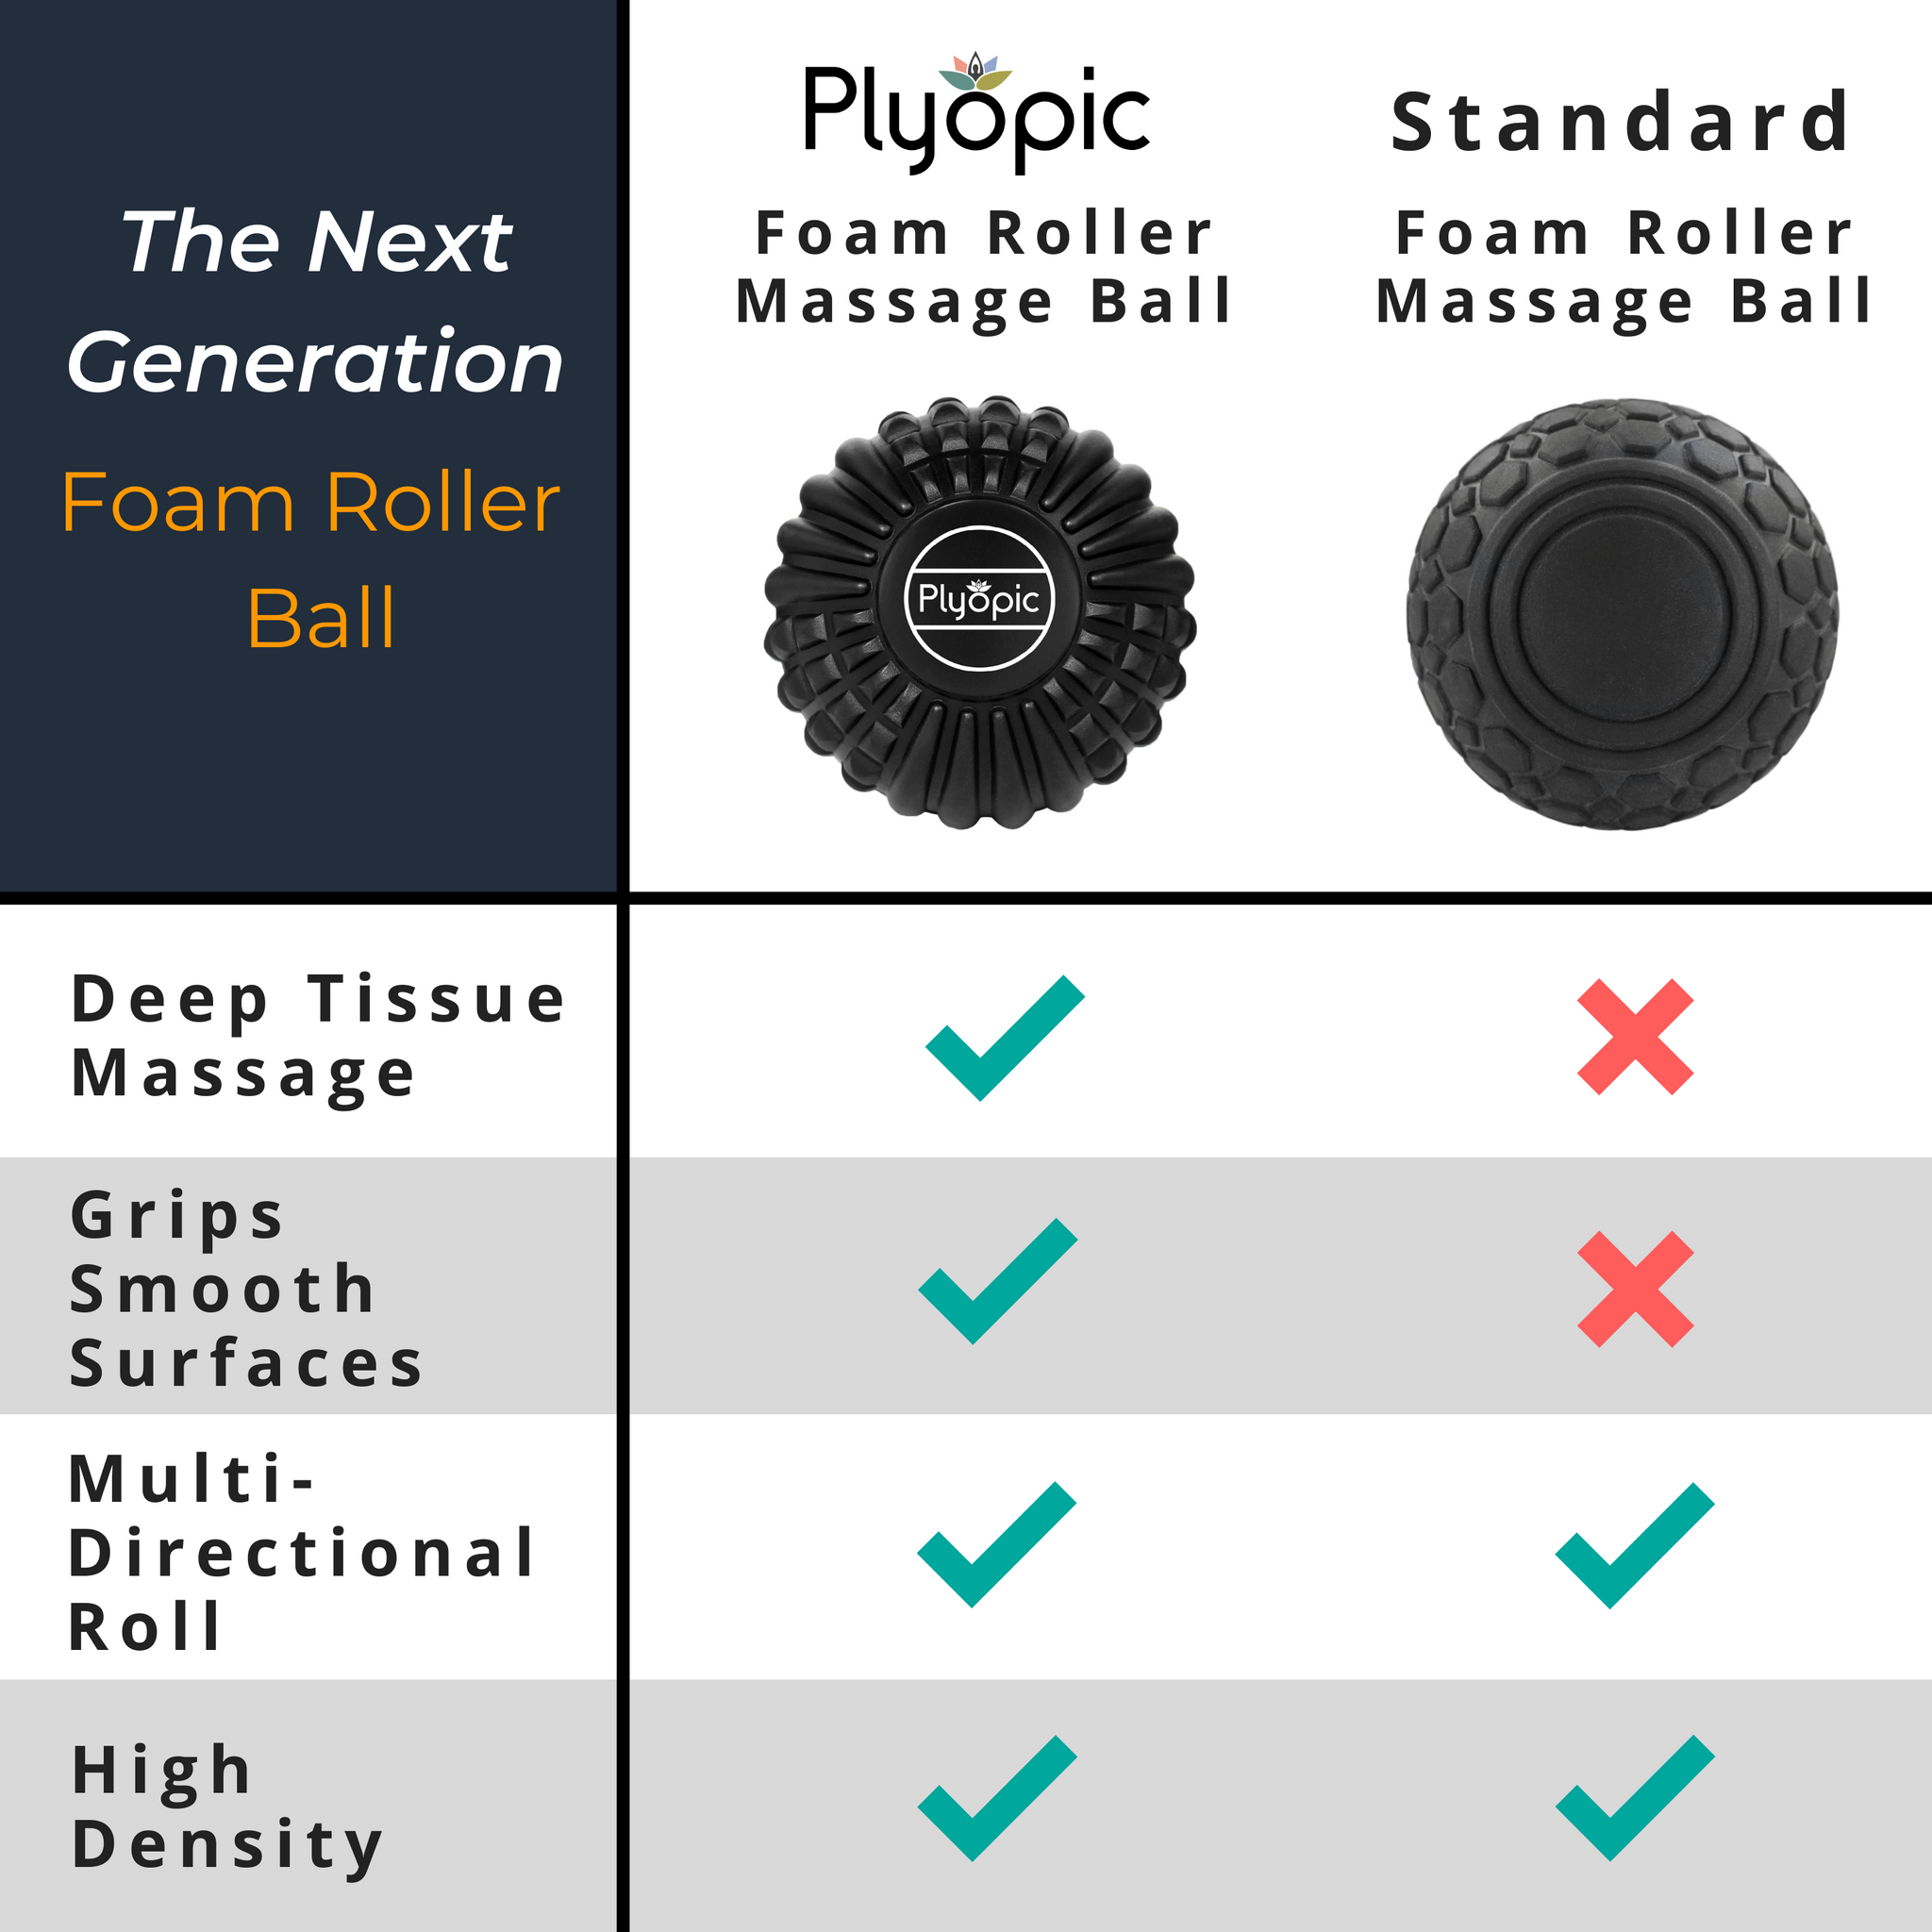 Plyopic-Plyopic Deep Tissue Massage Ball Set Benefits of Plyopic Foam Roller Massage Ball vs Standard Foam Roller Massage Ball